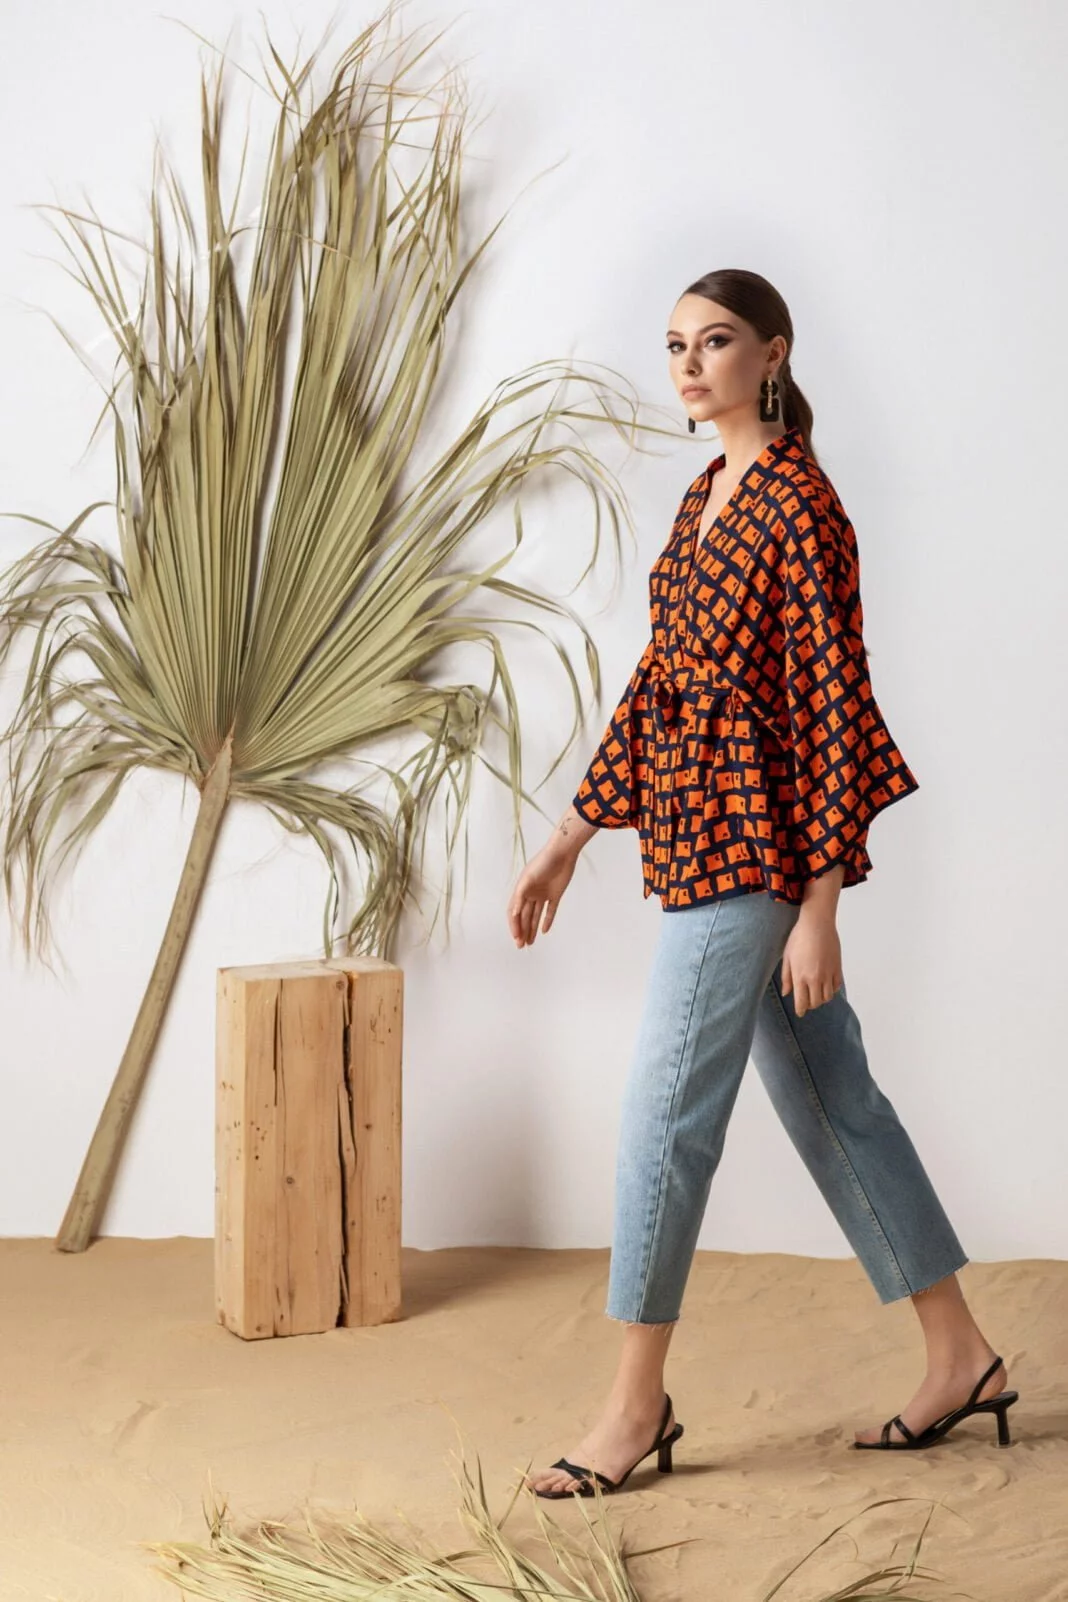 Stylish Kimono Top with Geometric Print - Fusion of Orange and Black